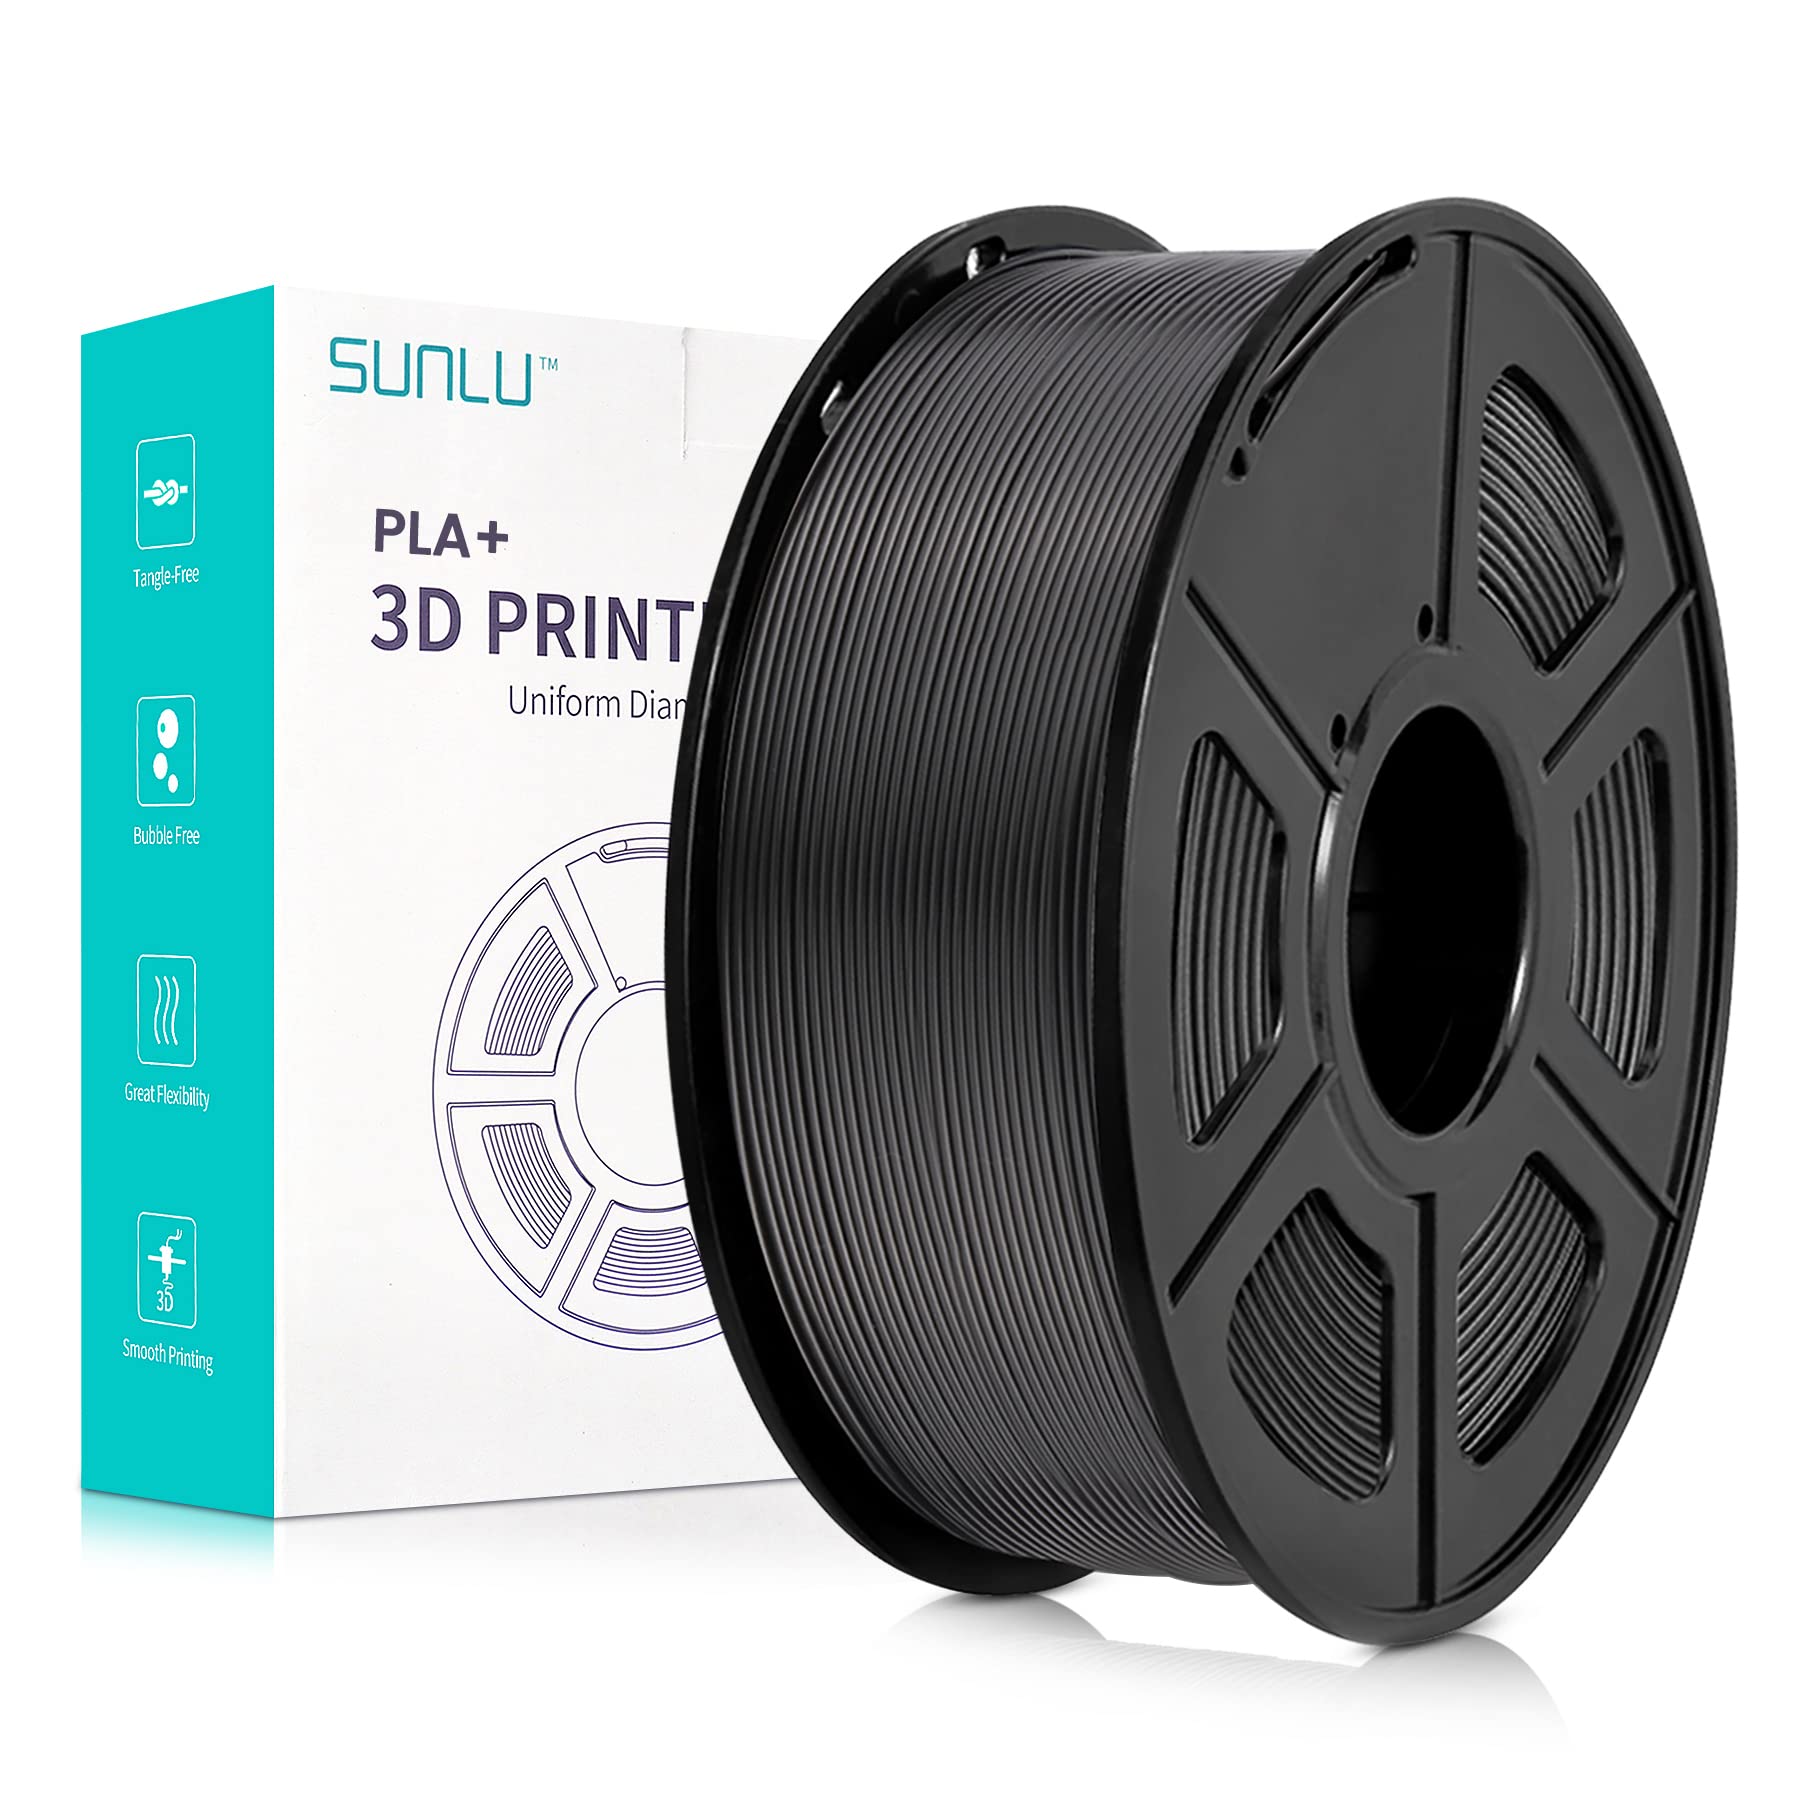 SUNLU PLA+ Filament 1.75mm, Neatly Wound 3D Drucker Filament PLA Plus, Stark PLA+ Filament 1.75 1kg, Gute Haftung für 3D Druck, Maßgenauigkeit +/- 0.02 mm, 1KG (2.2lbs), Schwarz